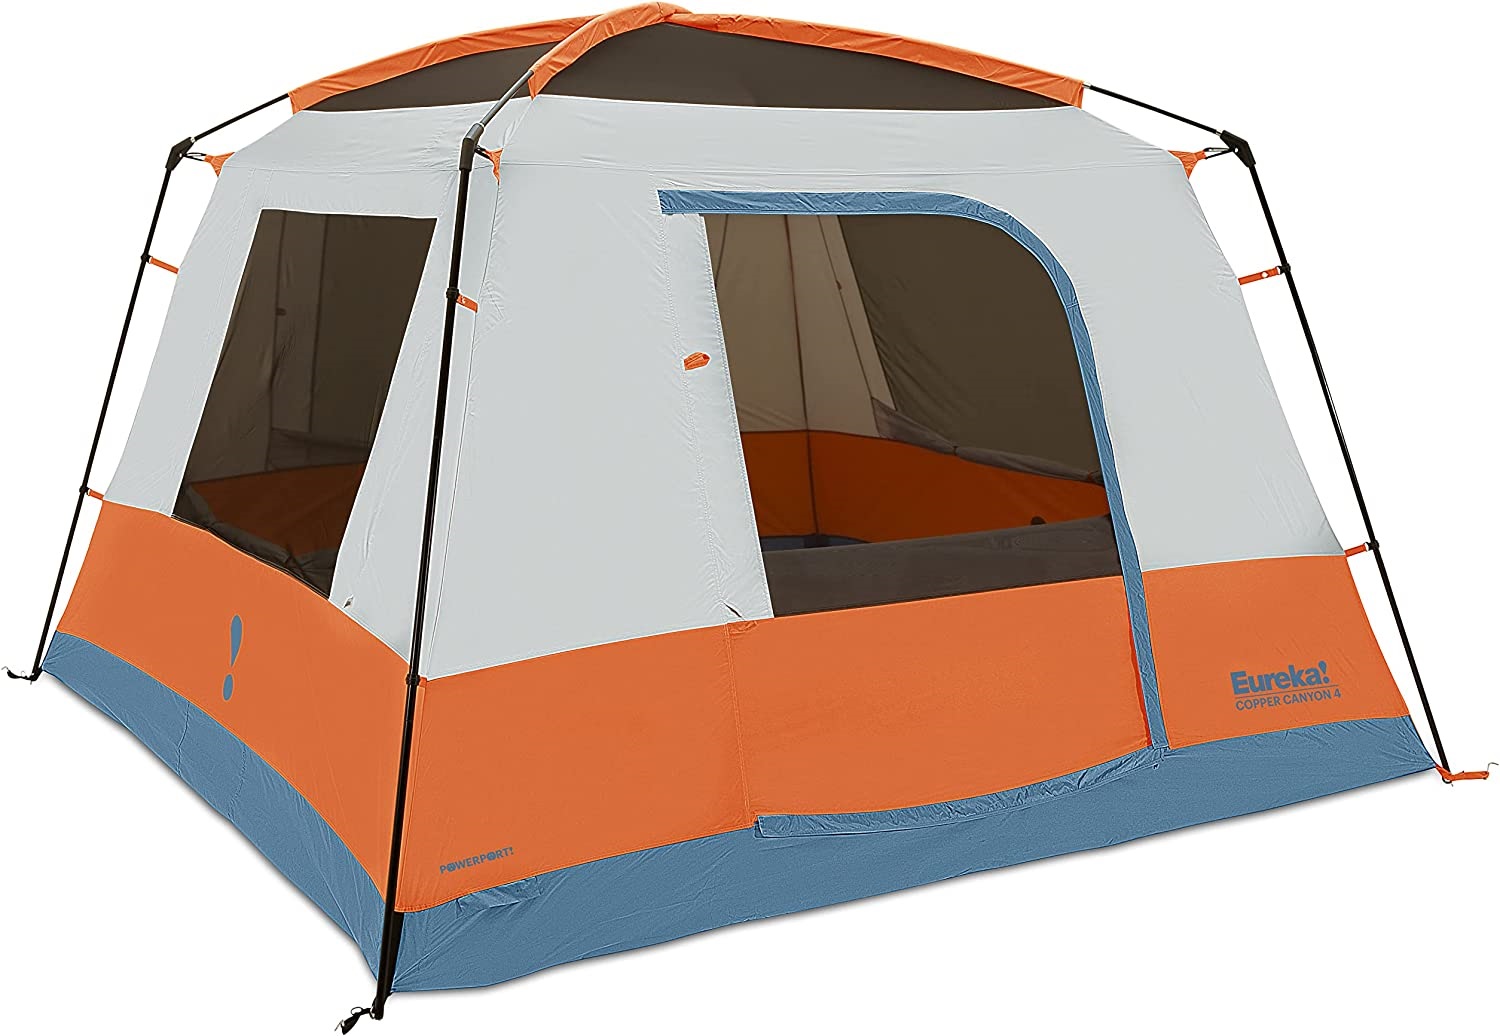 Eureka! Copper Canyon LX, 3 Season, Family and Car Camping Tent